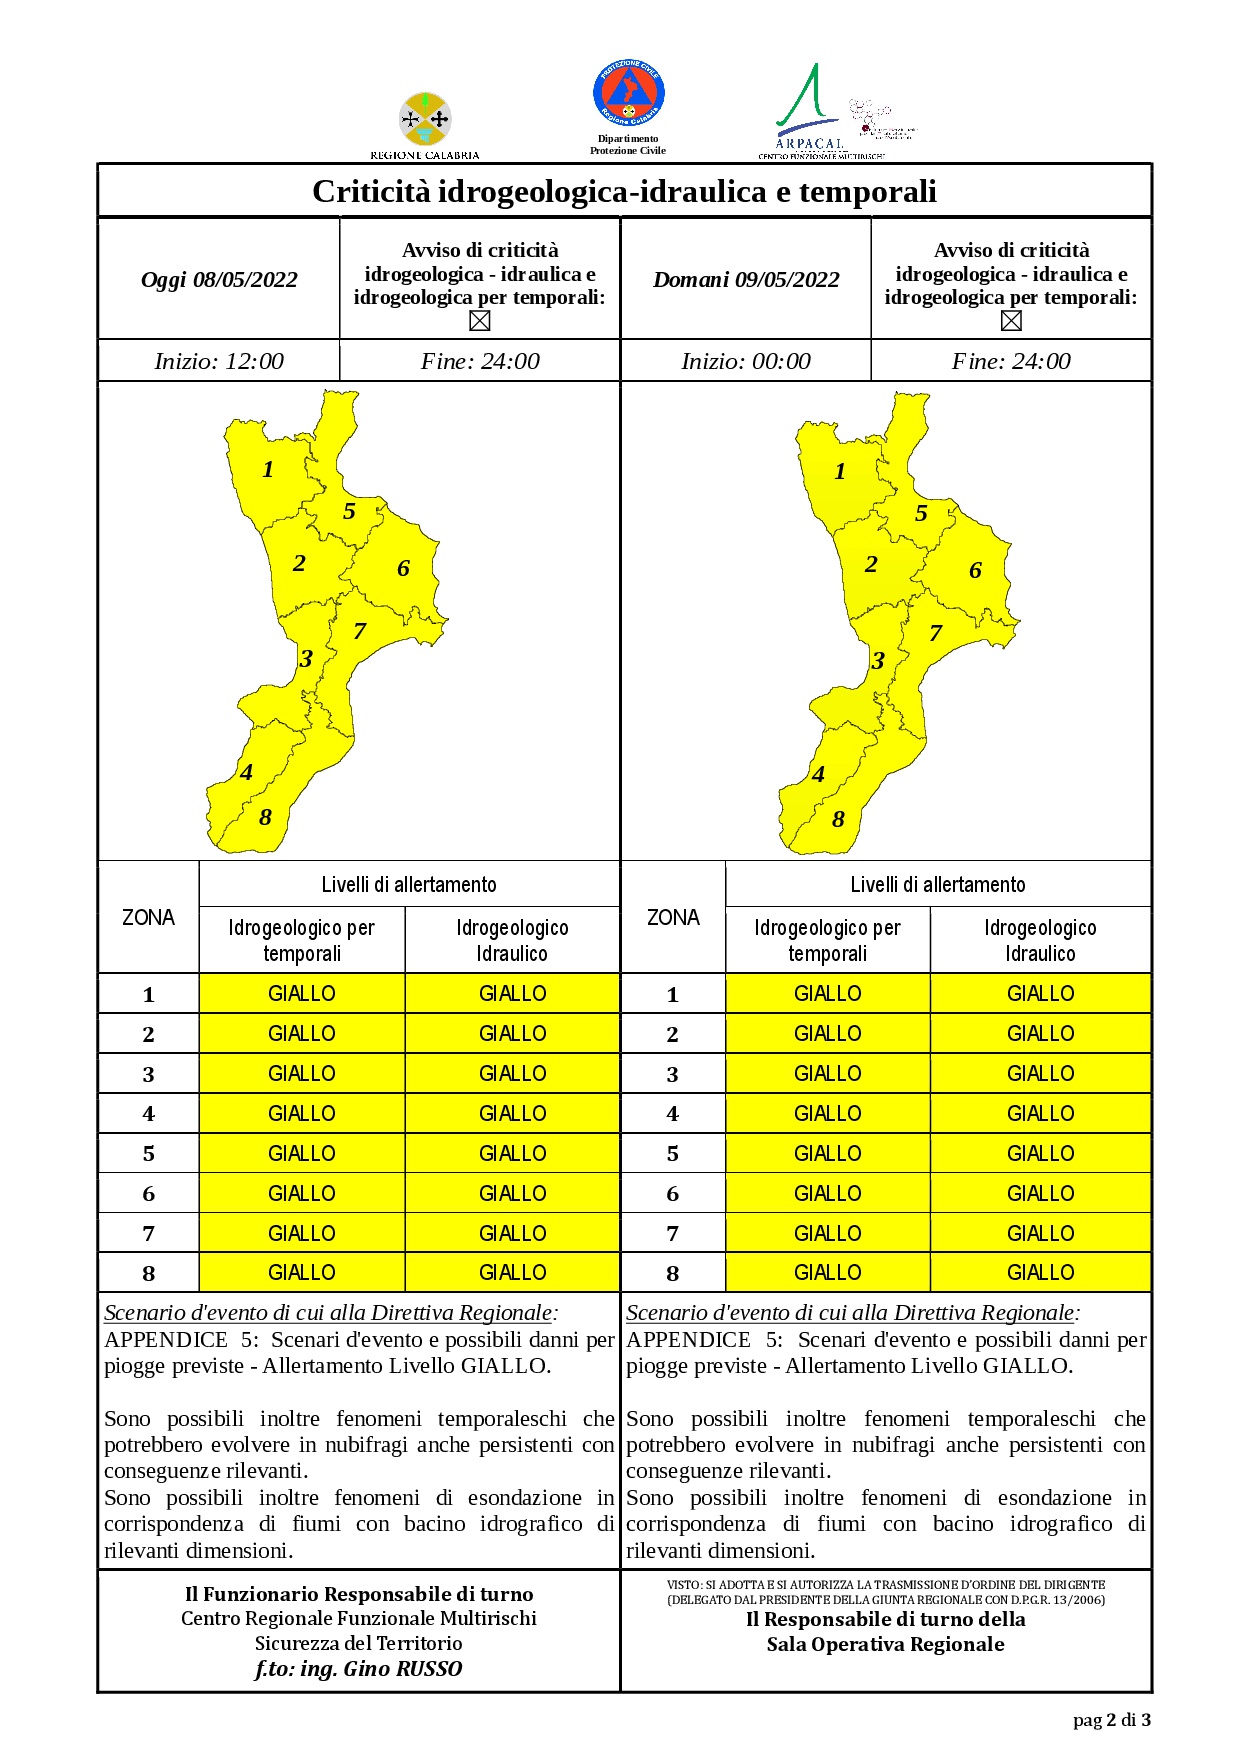 Criticità idrogeologica-idraulica e temporali in Calabria 08-05-2022